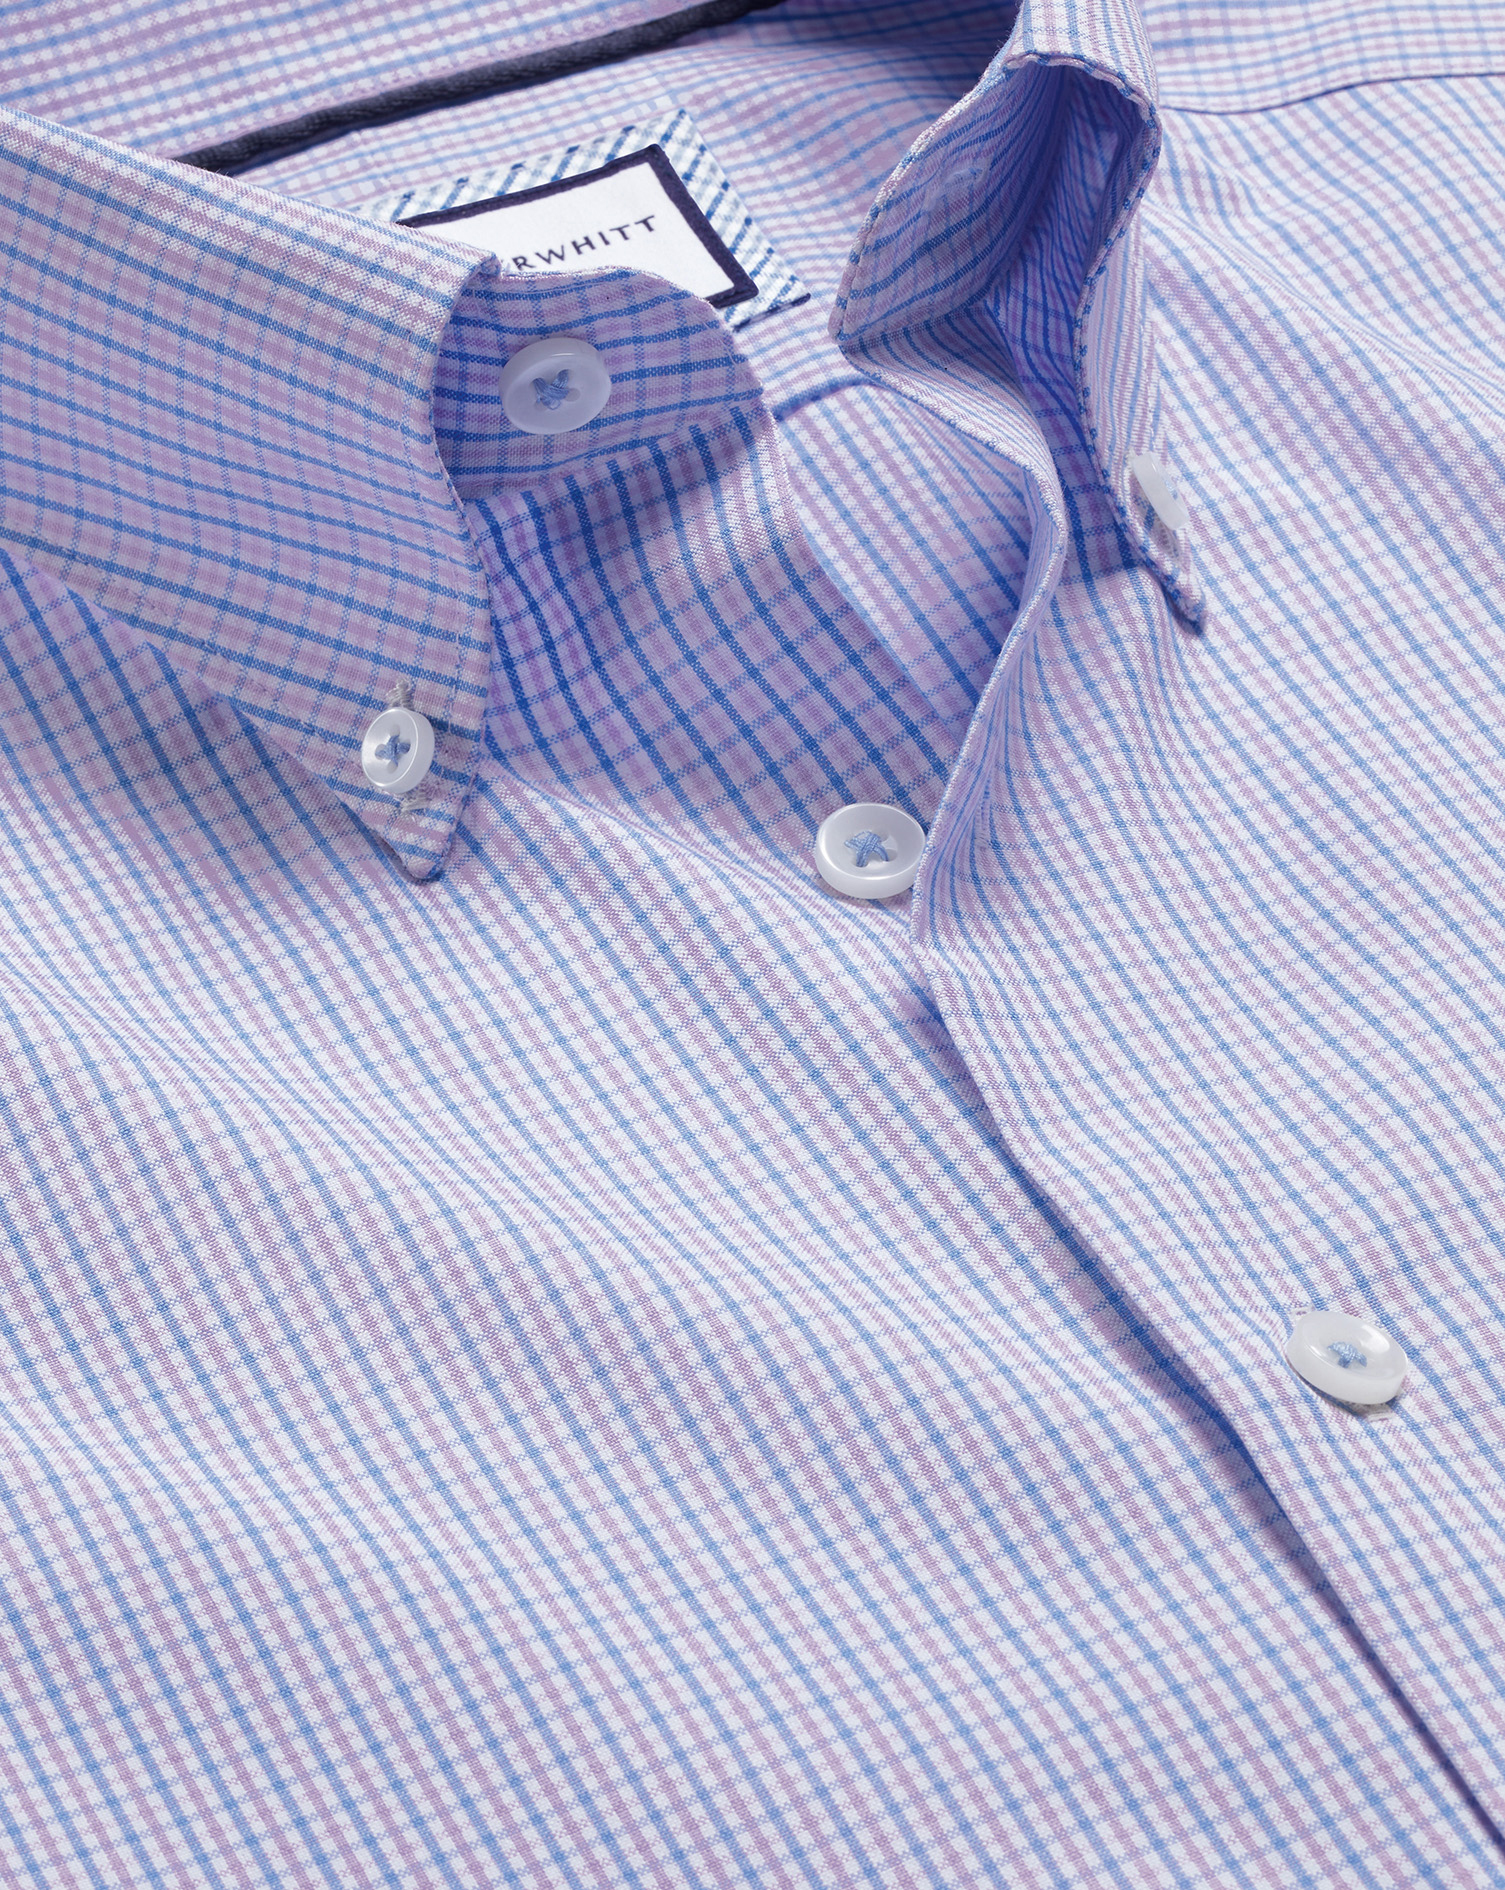 Men's Charles Tyrwhitt Button-Down Collar Non-Iron Oxford Gingham Check Dress Shirt - Violet Purple 